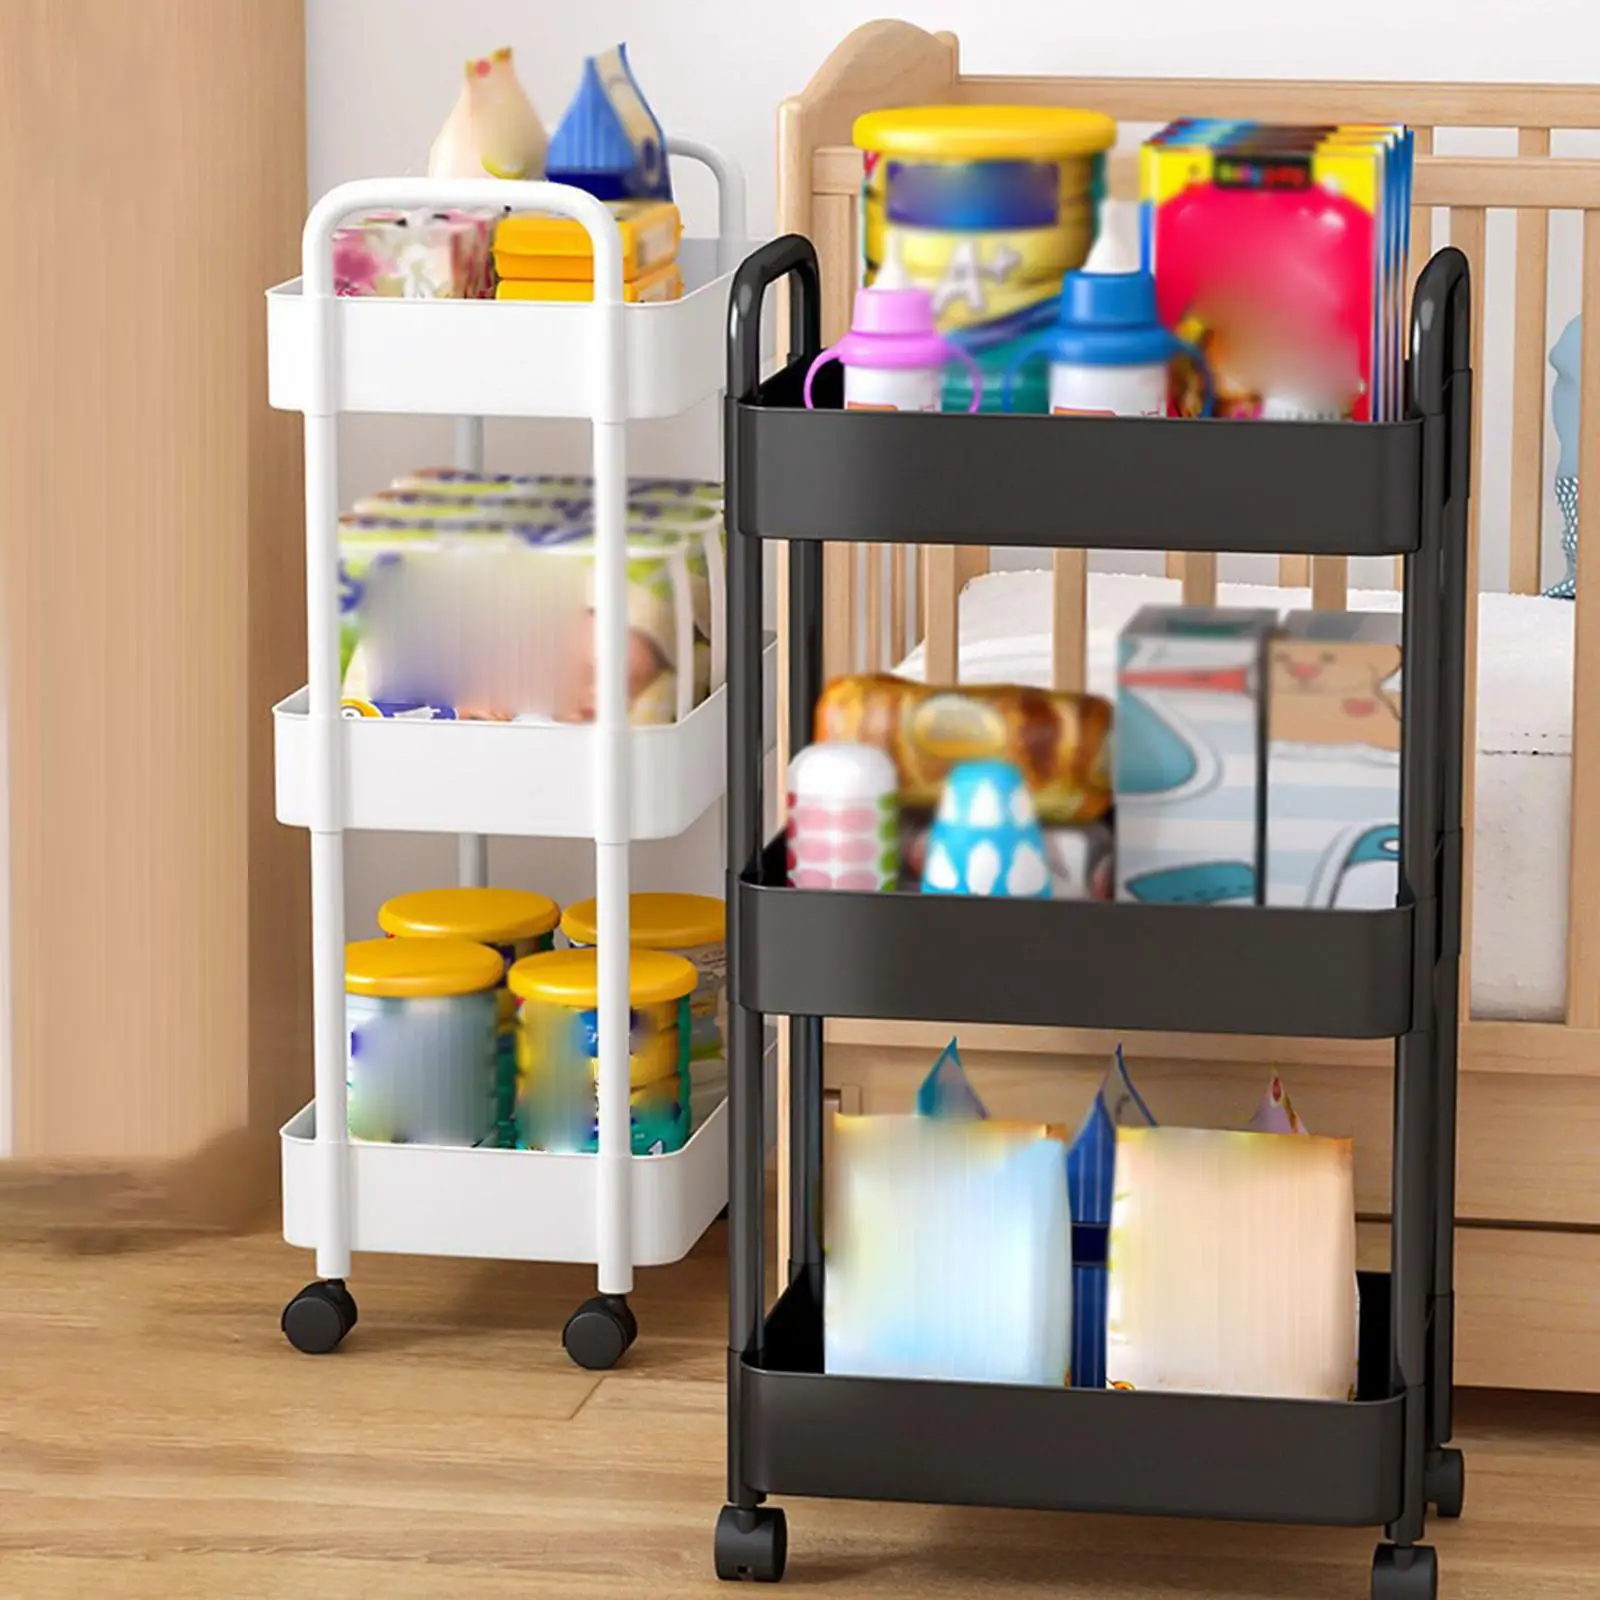 3 Layer Rolling Storage Organizer Organization Cart Holder Corner Shelf Free Standing Organizer for Living Room Office Kitchen